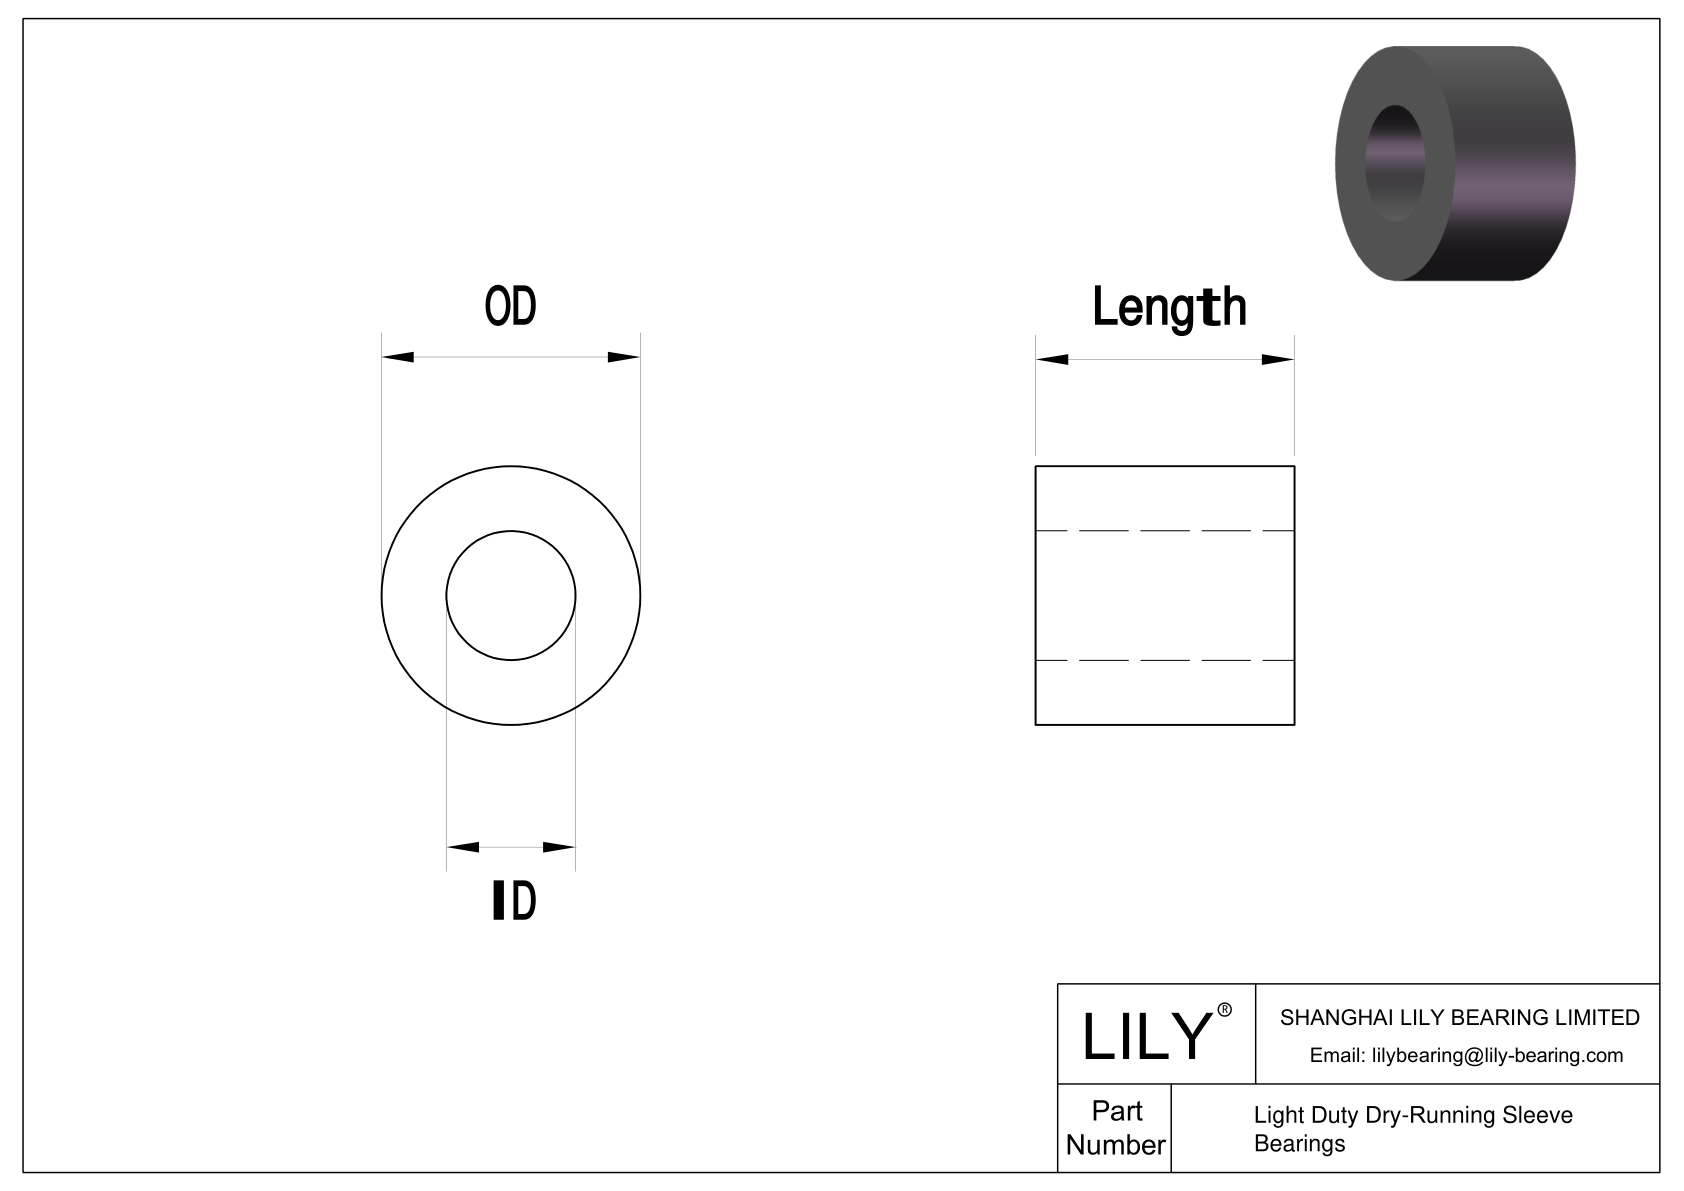 6389K855 Light Duty Dry-Running Sleeve Bearings cad drawing